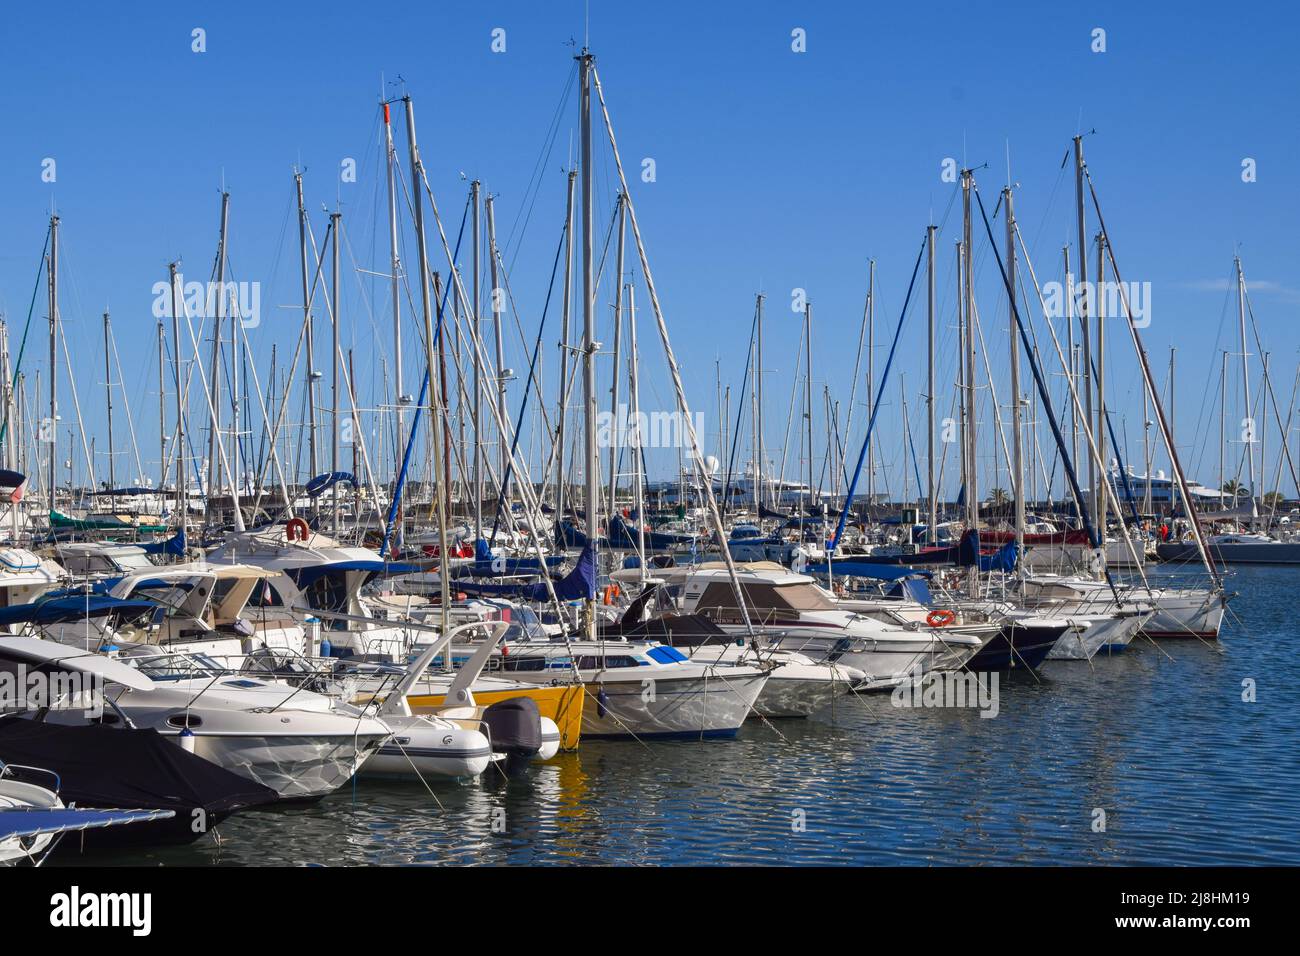 Boats in Golfe Juan marina, South of France Stock Photo